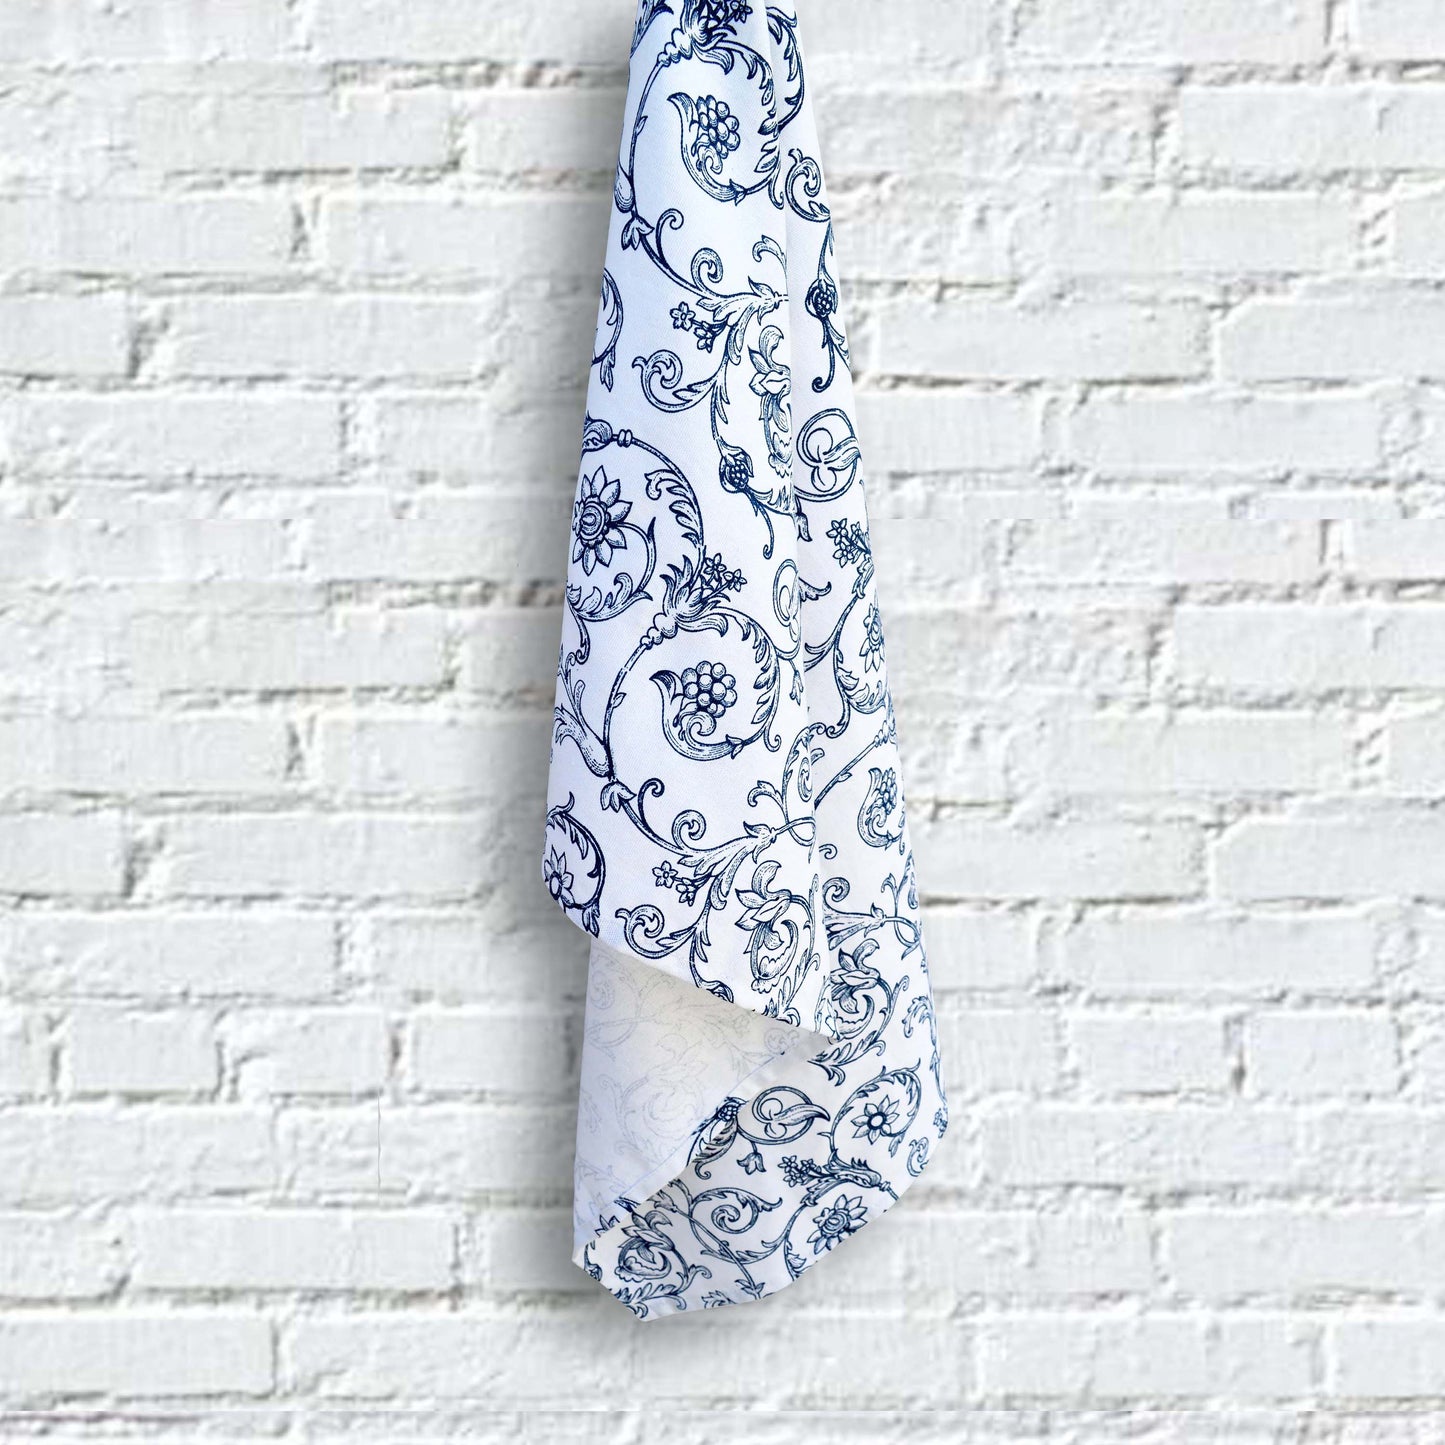 SWIRL cotton Table napkin, blue swirl victorian print on white